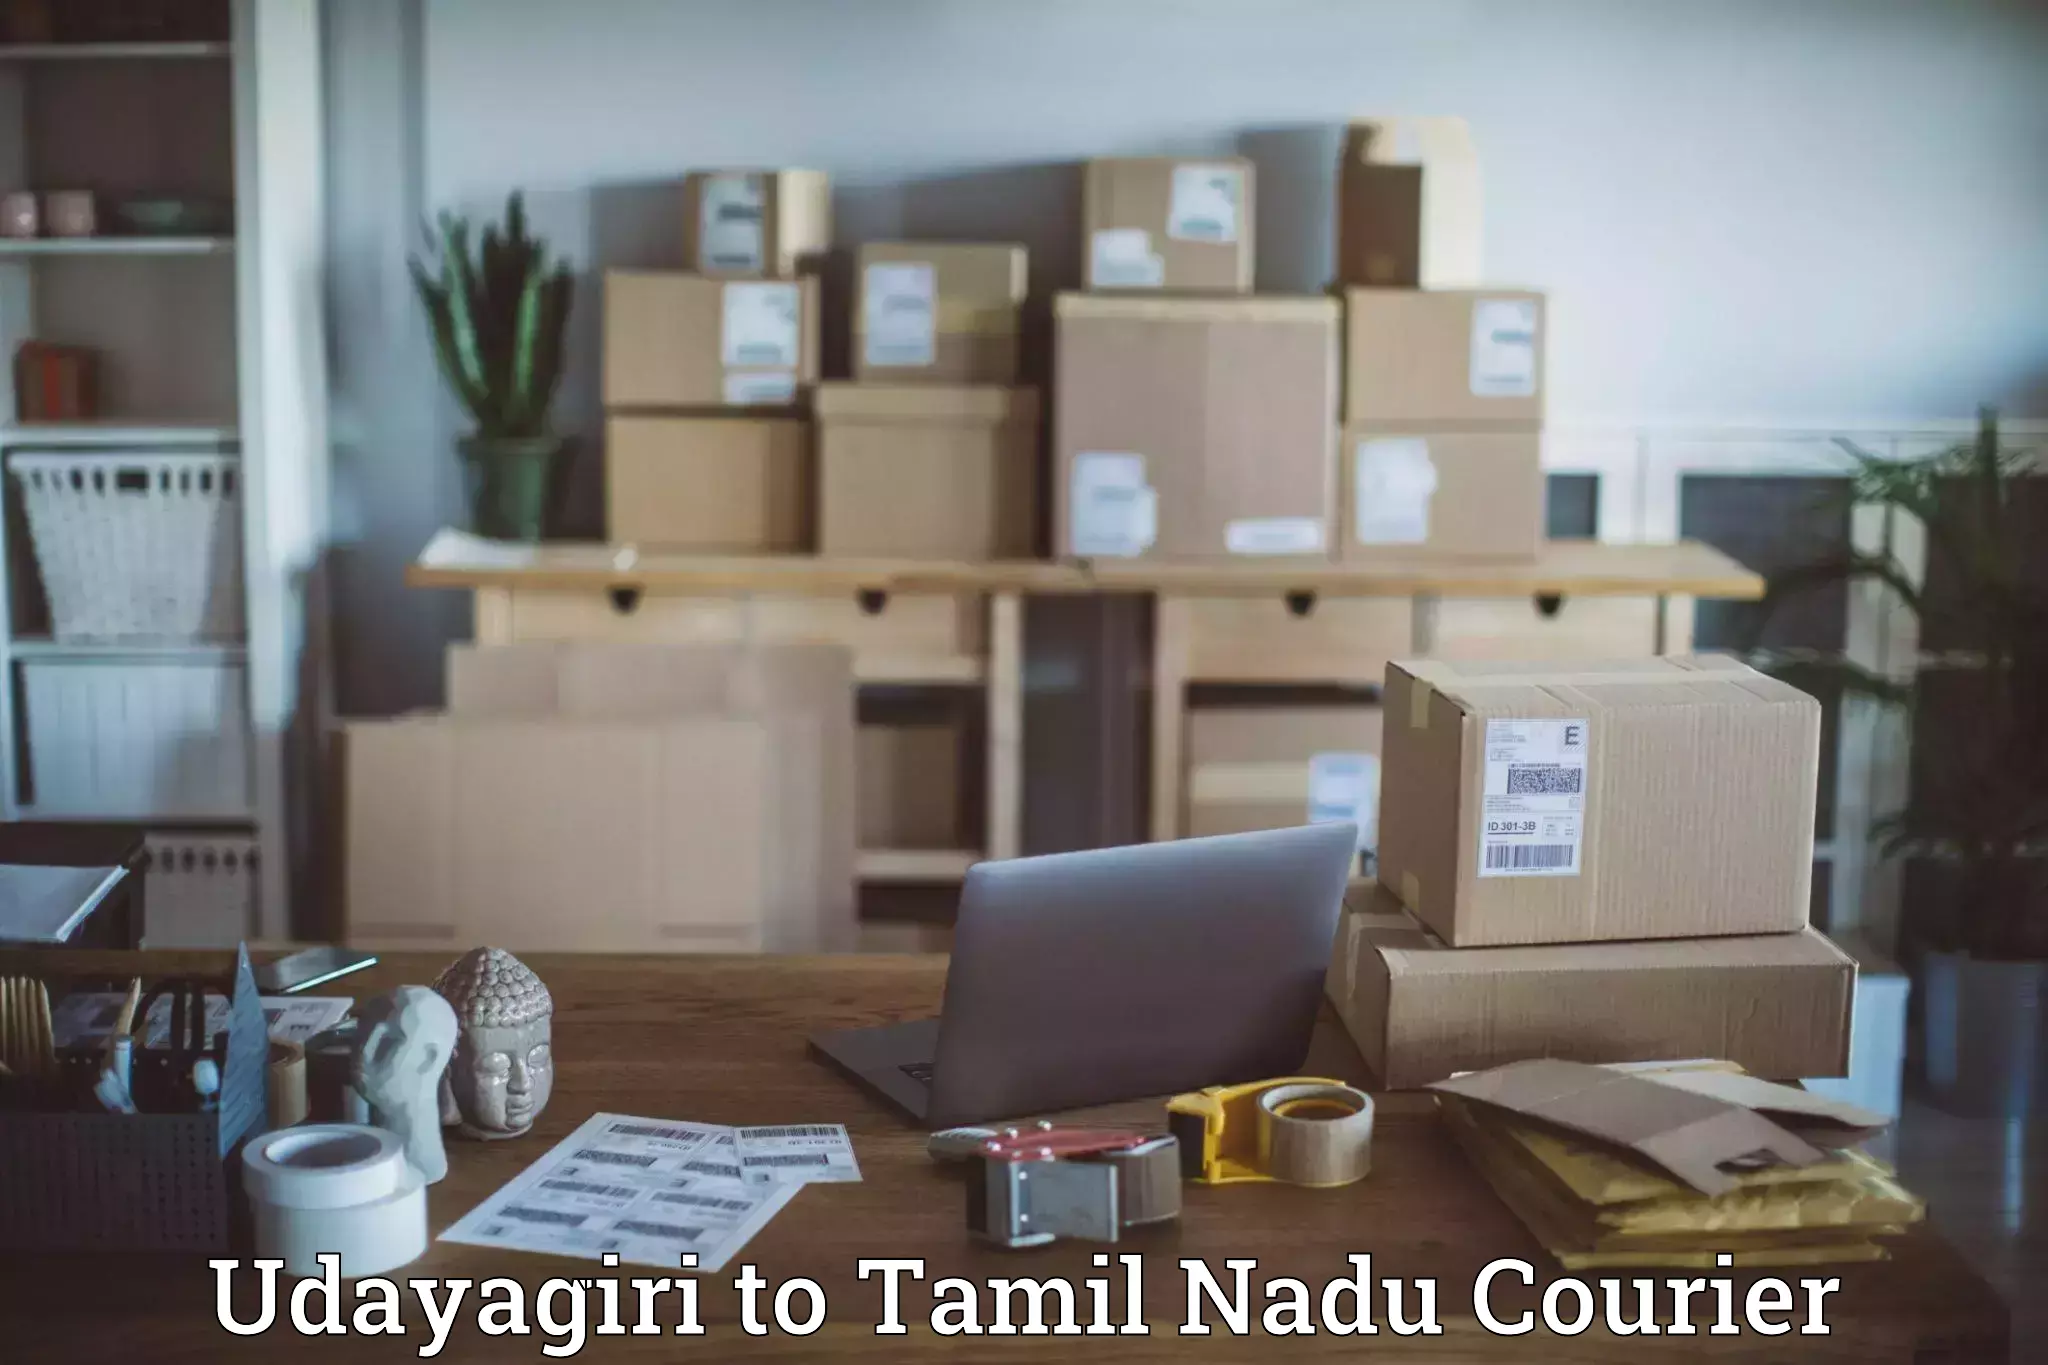 Efficient parcel service Udayagiri to Thiruvadanai